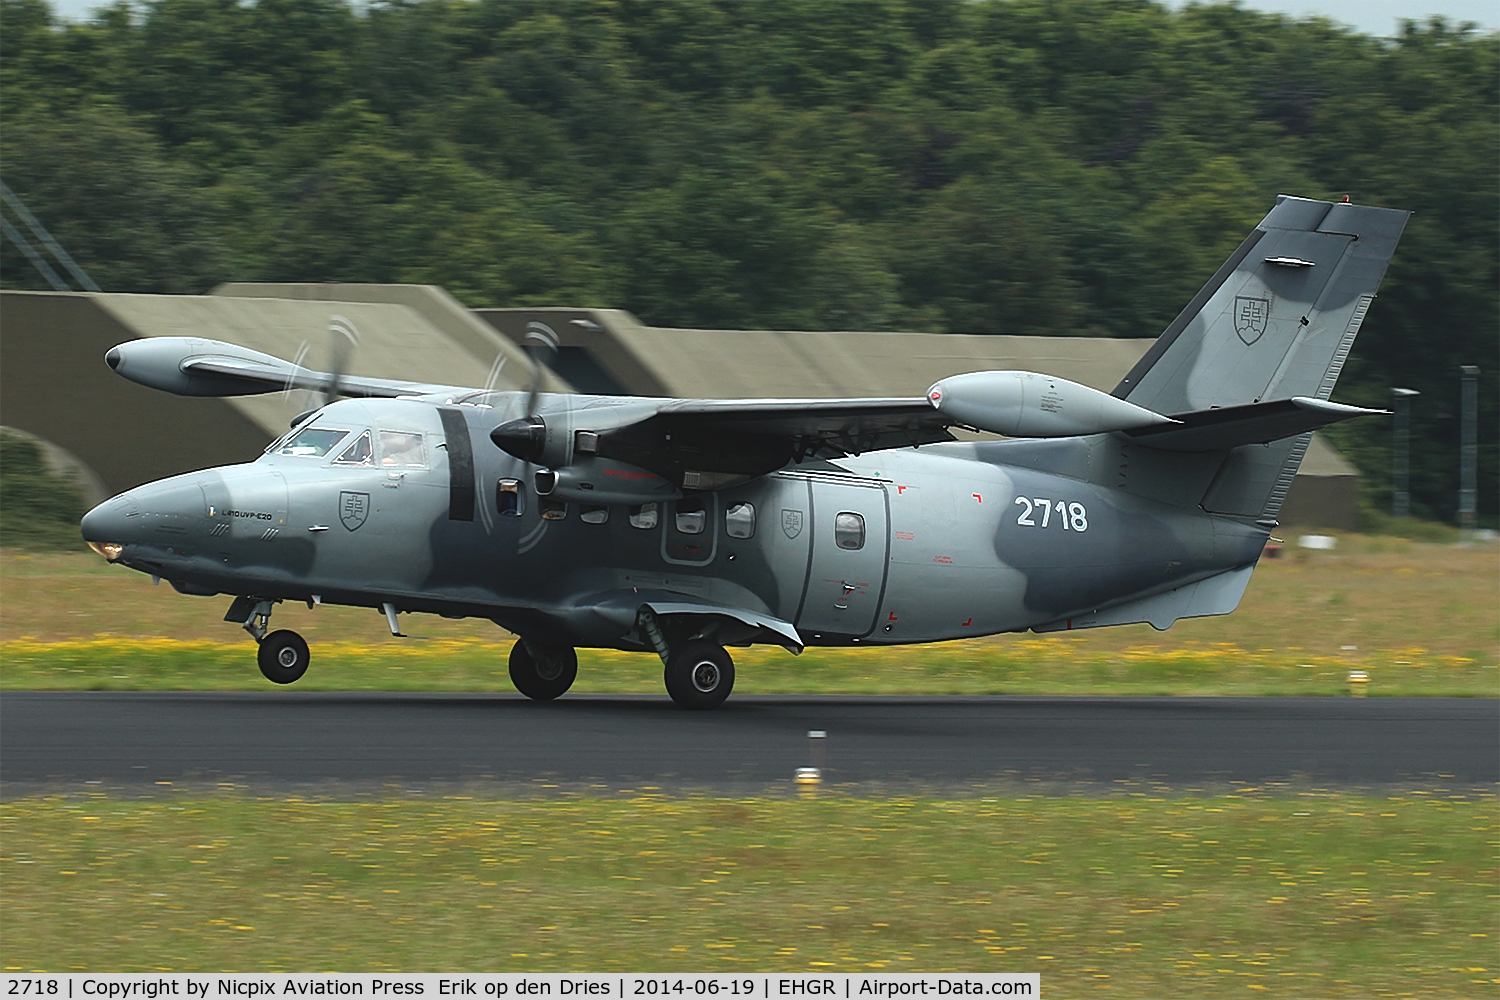 2718, 1992 Let L-410UVP-S Turbolet C/N 092718, 2718 landing at Gilze-Rijen AB